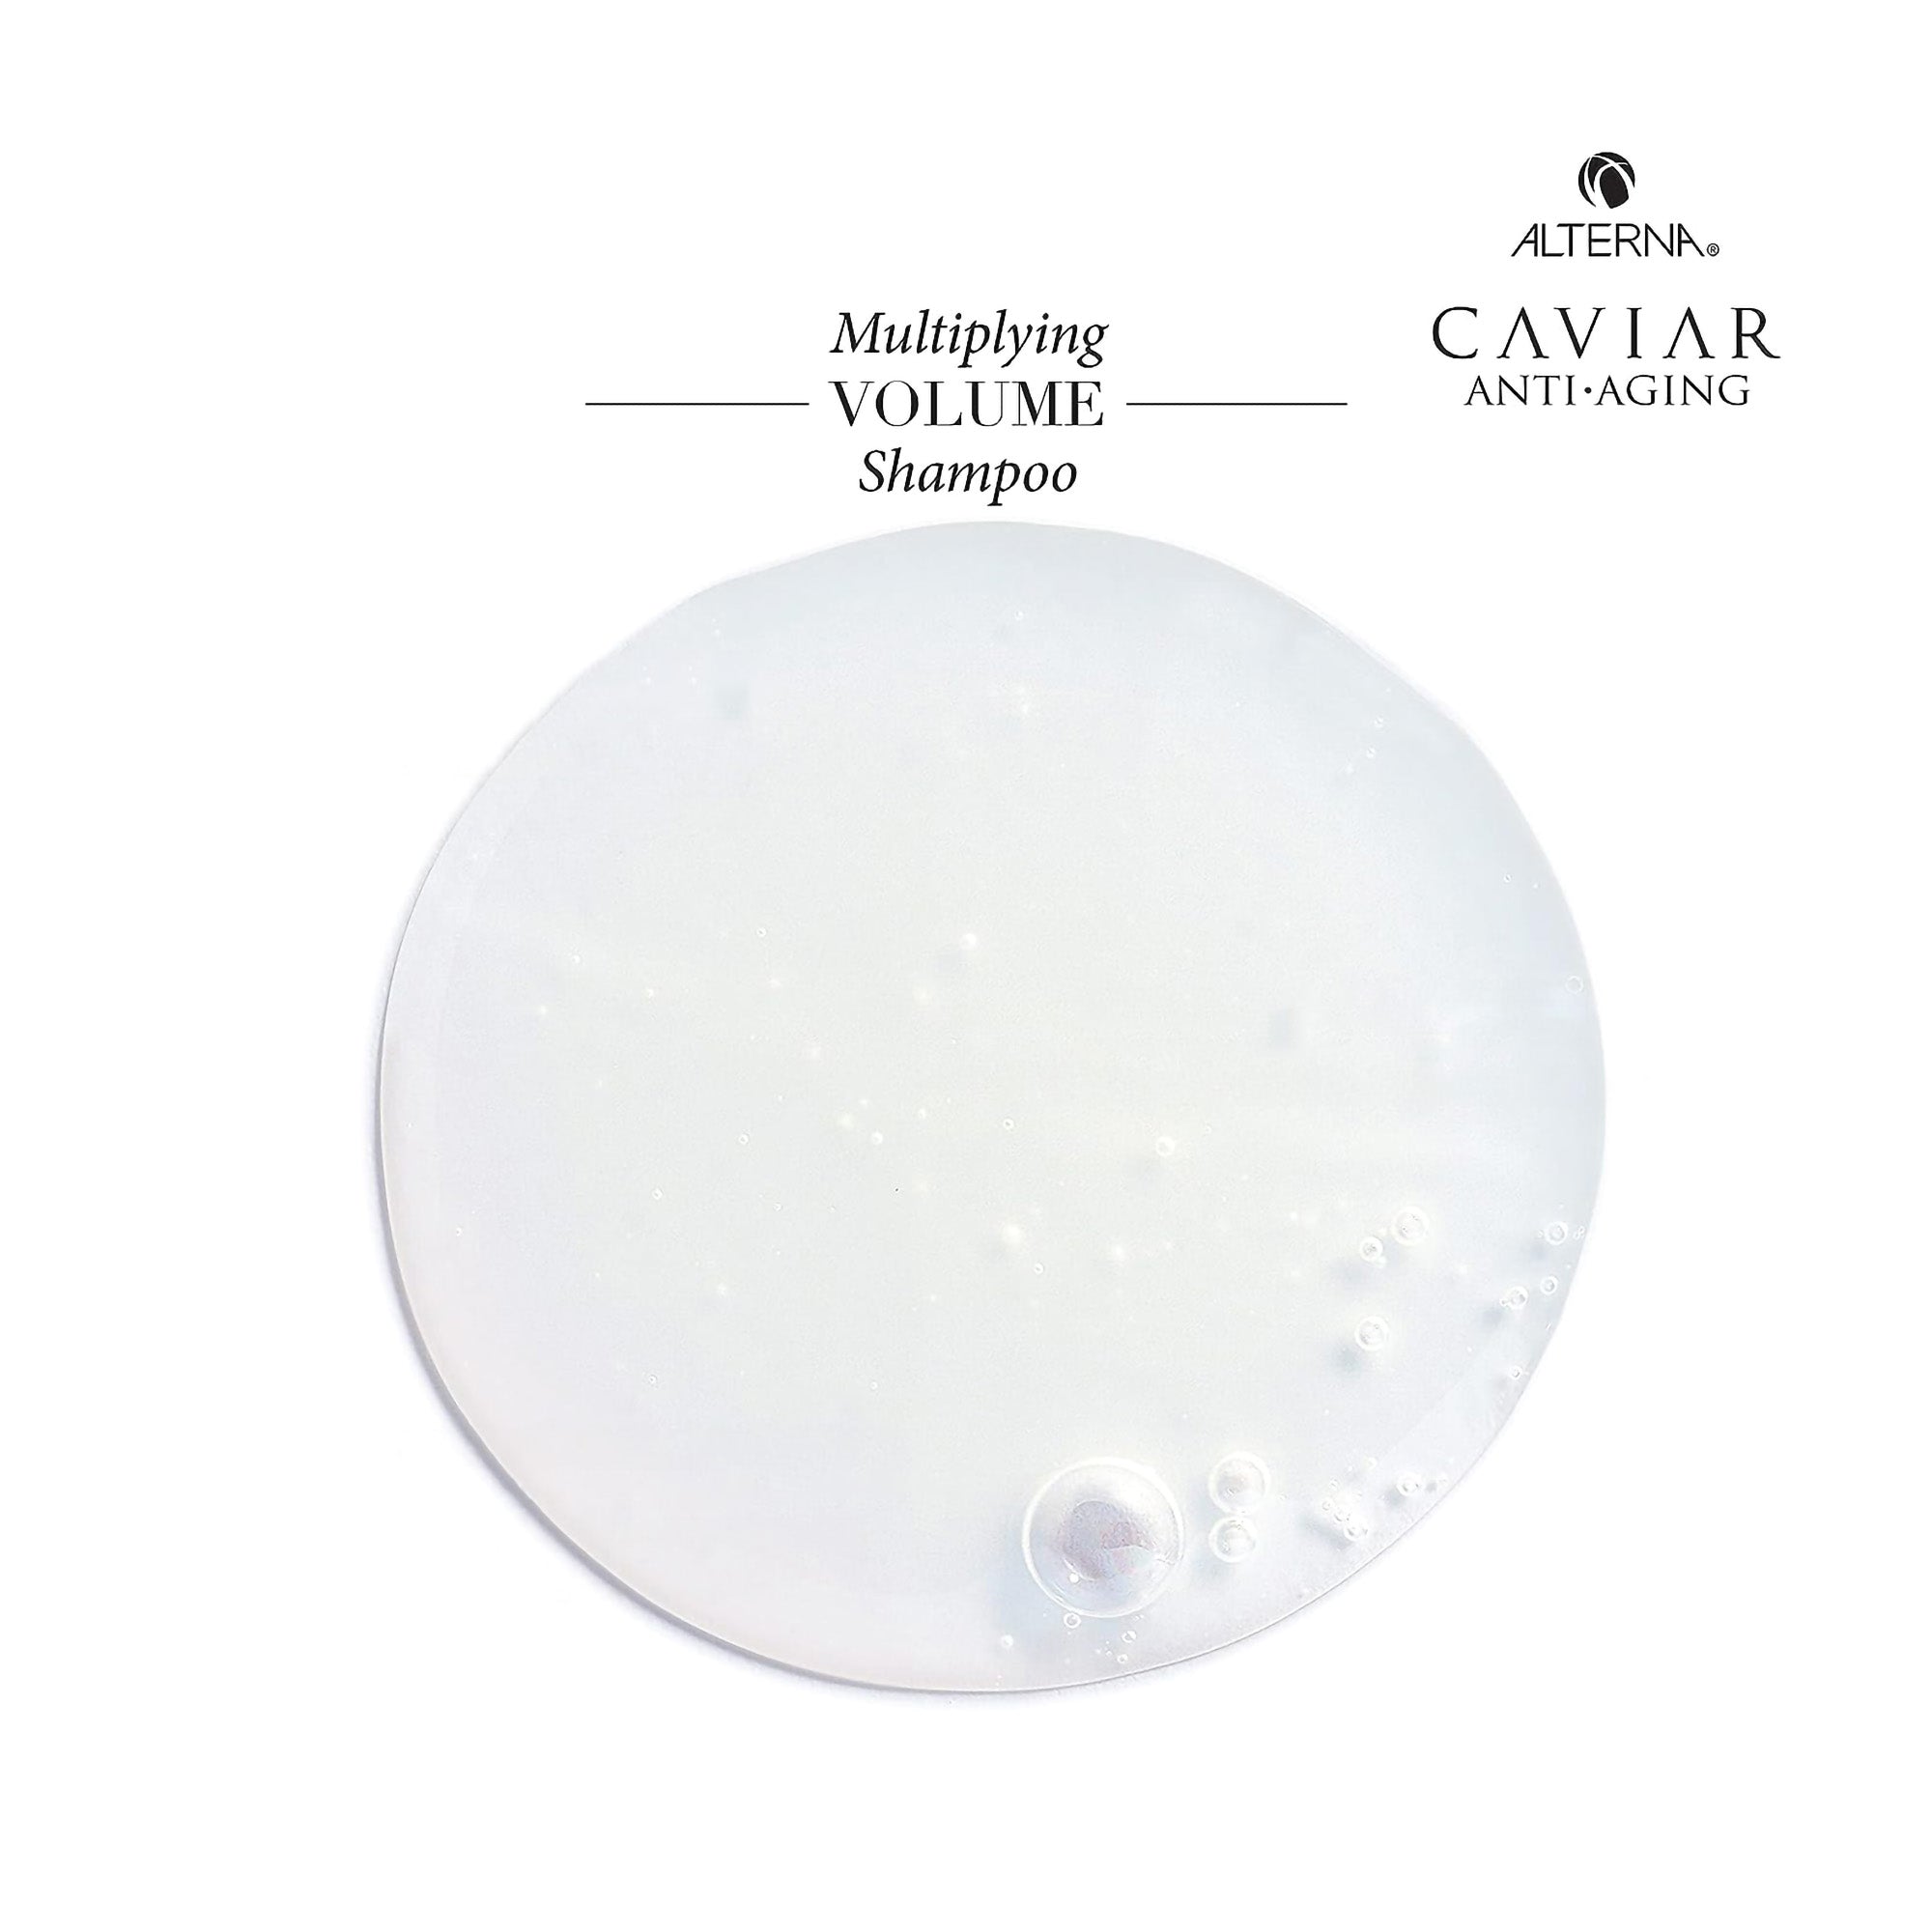 Alterna Caviar Anti-Aging Multiplying Volume Shampoo & Conditioner 8.5oz Bundle ($73 Value) / 8.5 oz